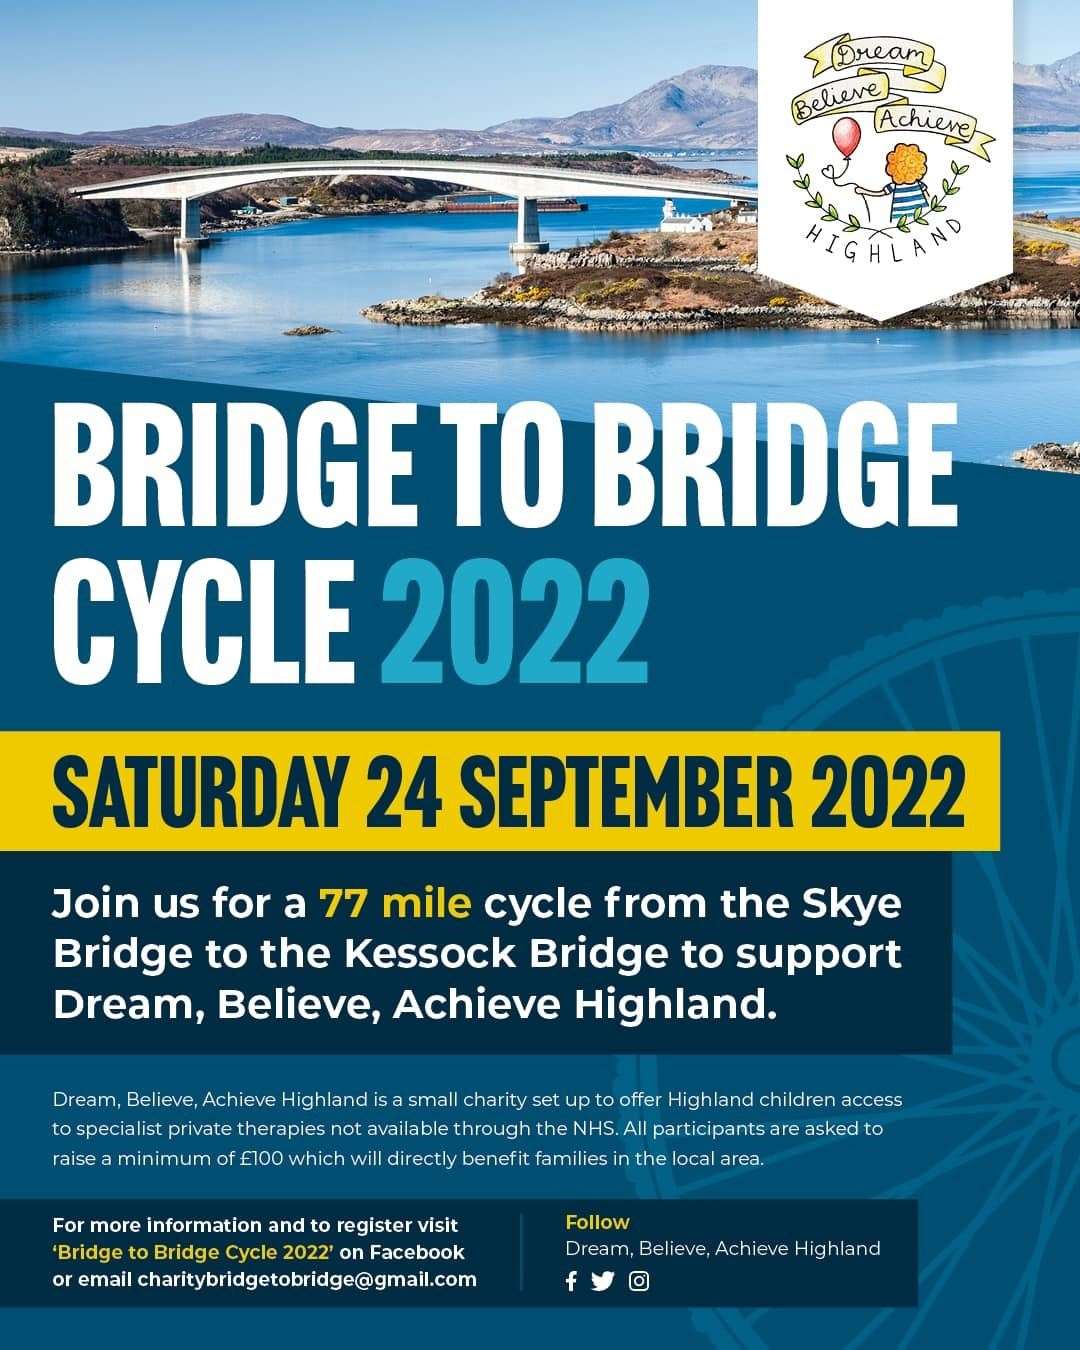 Event details for the Bridge to Bridge challenge for Dream Believe Achieve